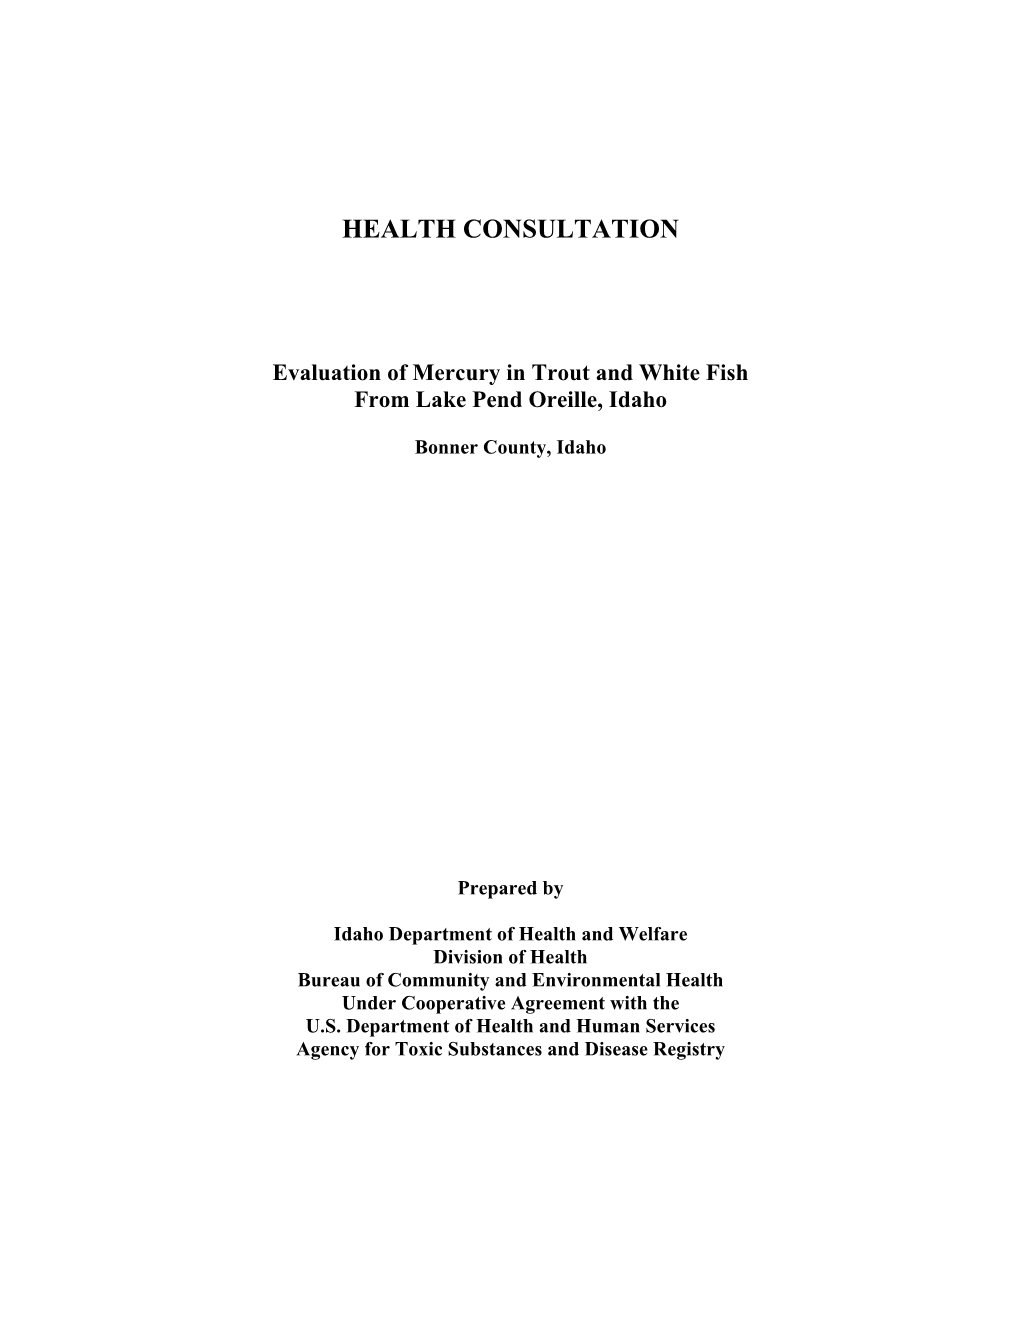 Health Consultation